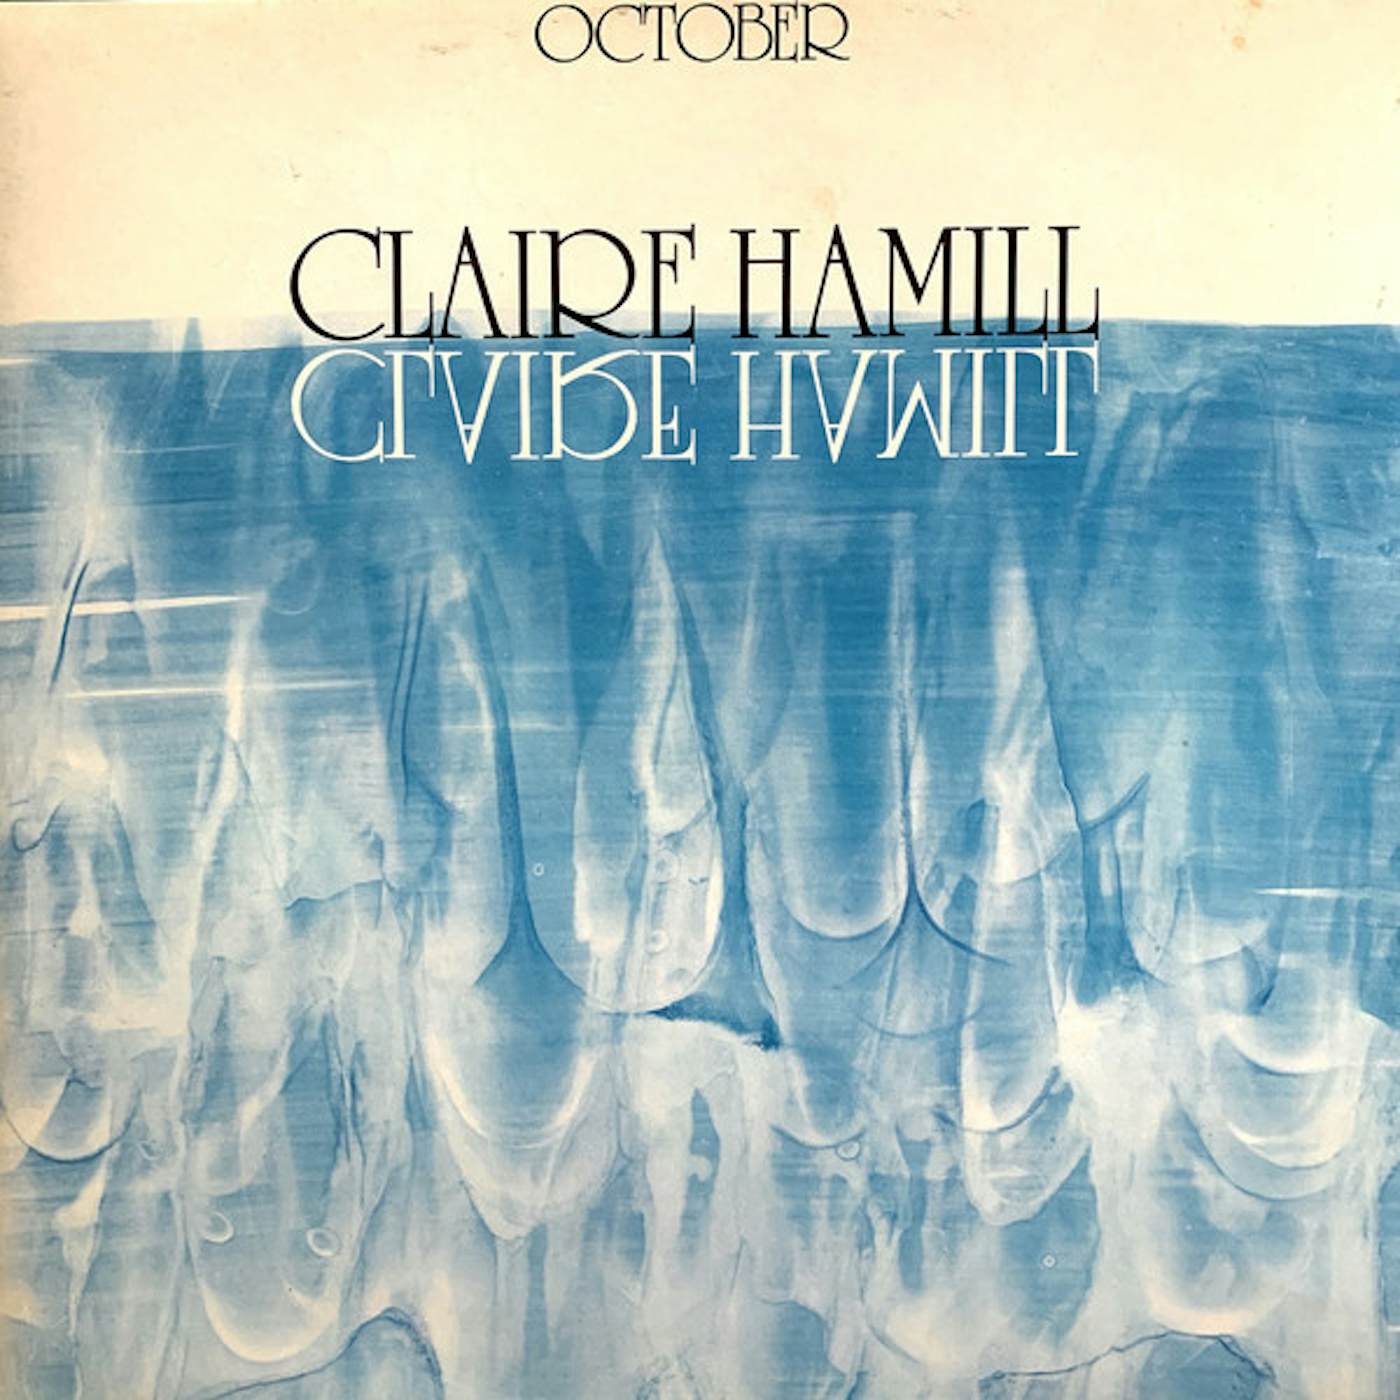 Claire Hamill October Vinyl Record